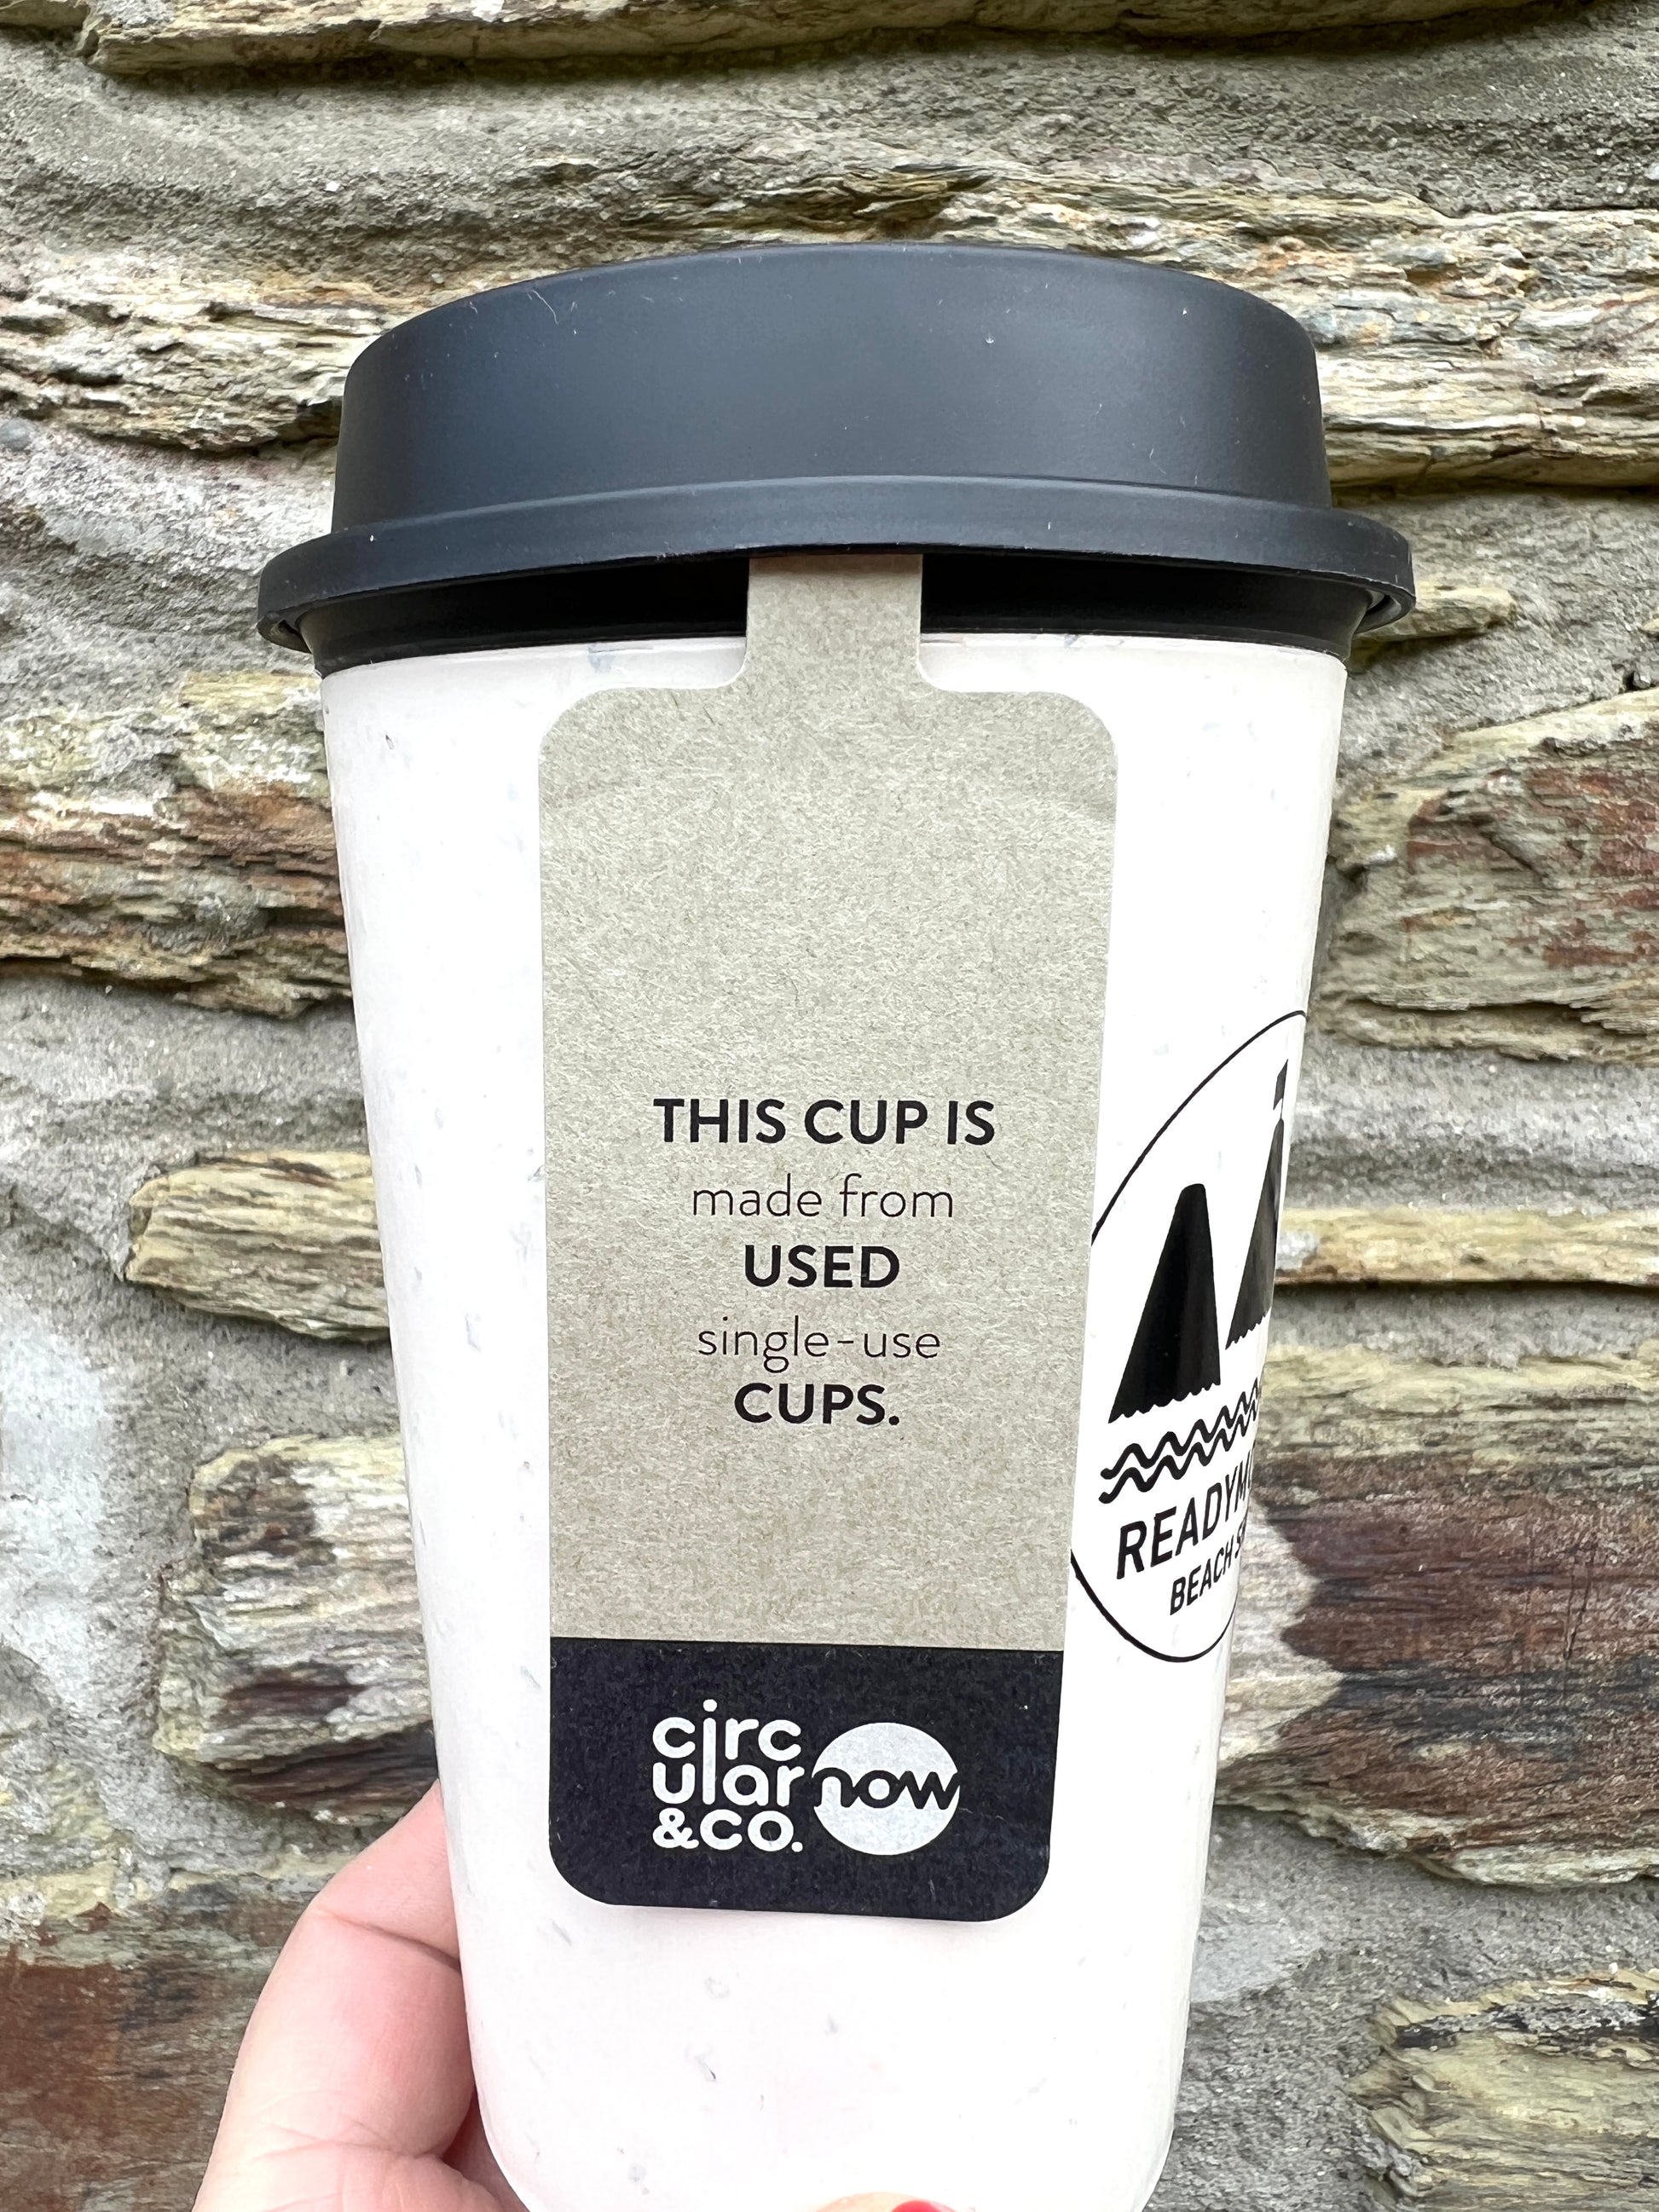 Readymoney Beach Shop Circular & Co Now mug mug made from  recycled single use cups